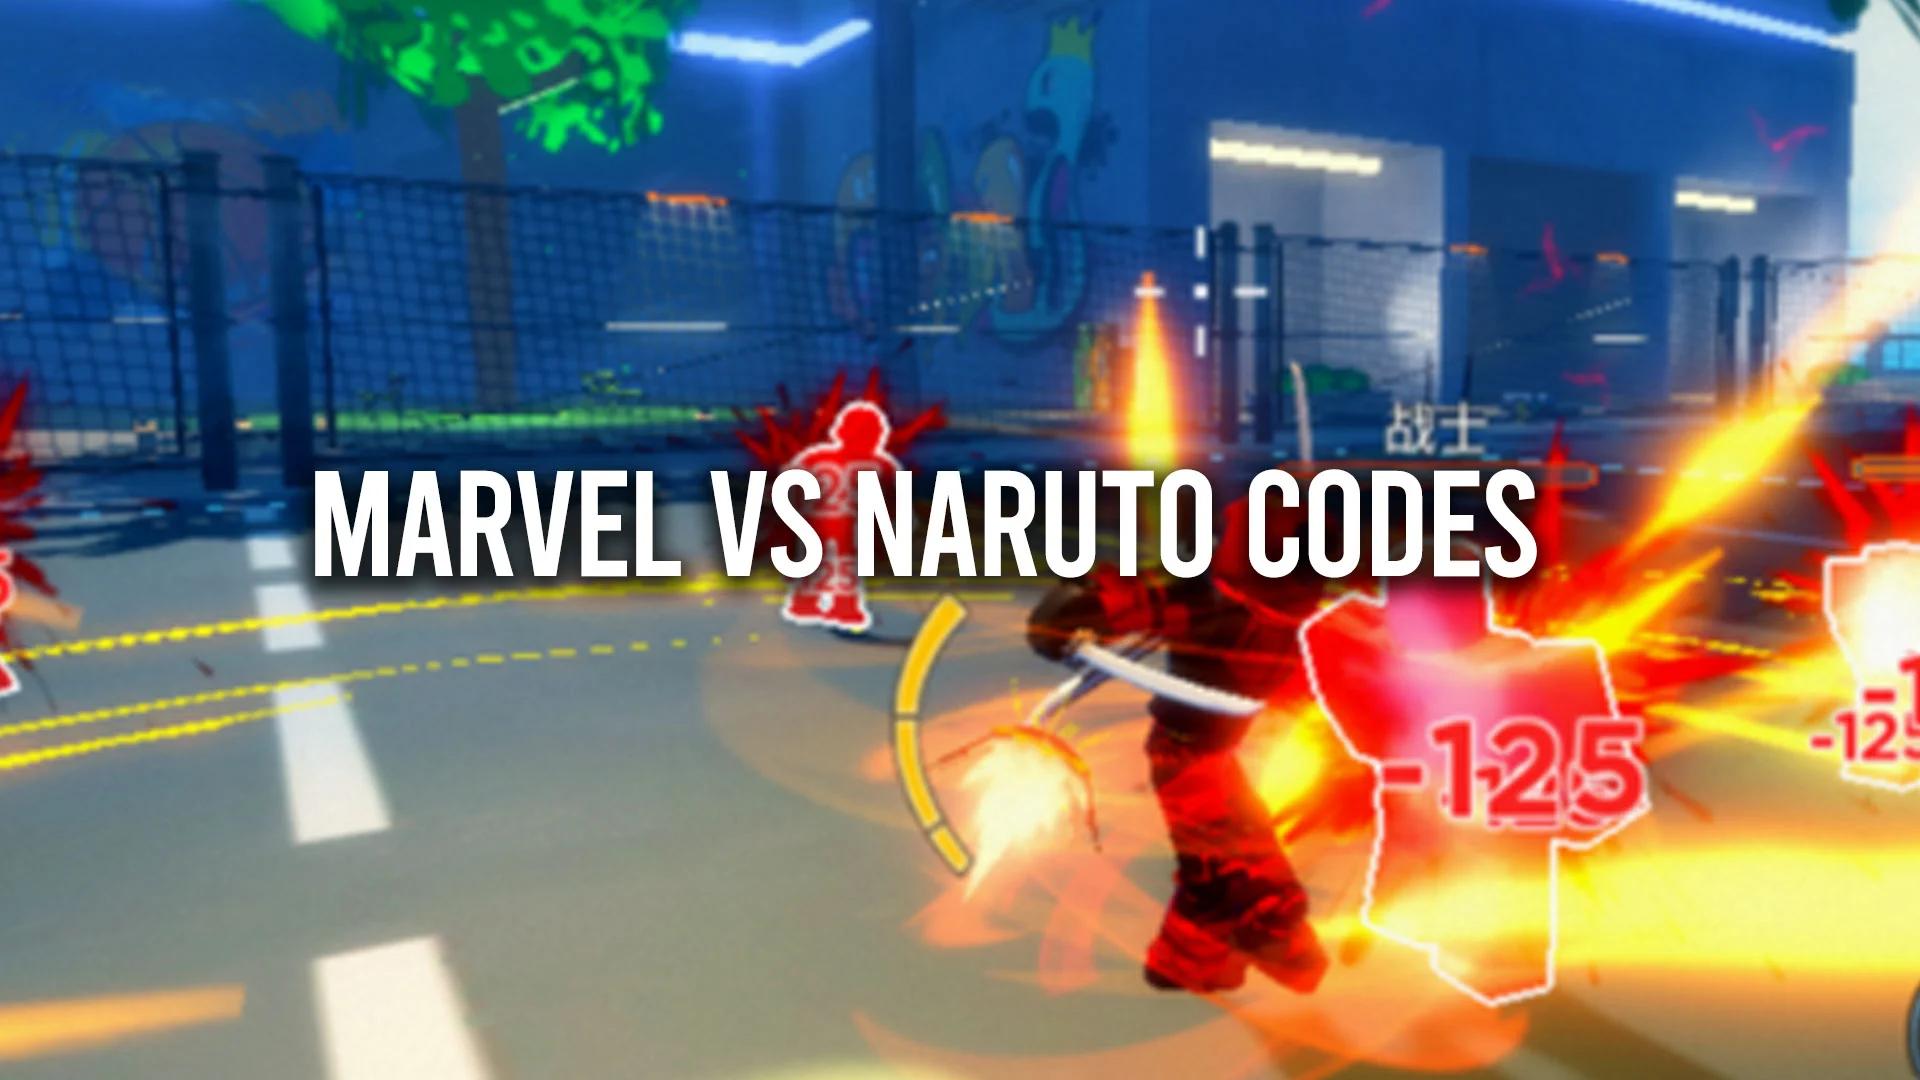 Marvel vs Naruto codes